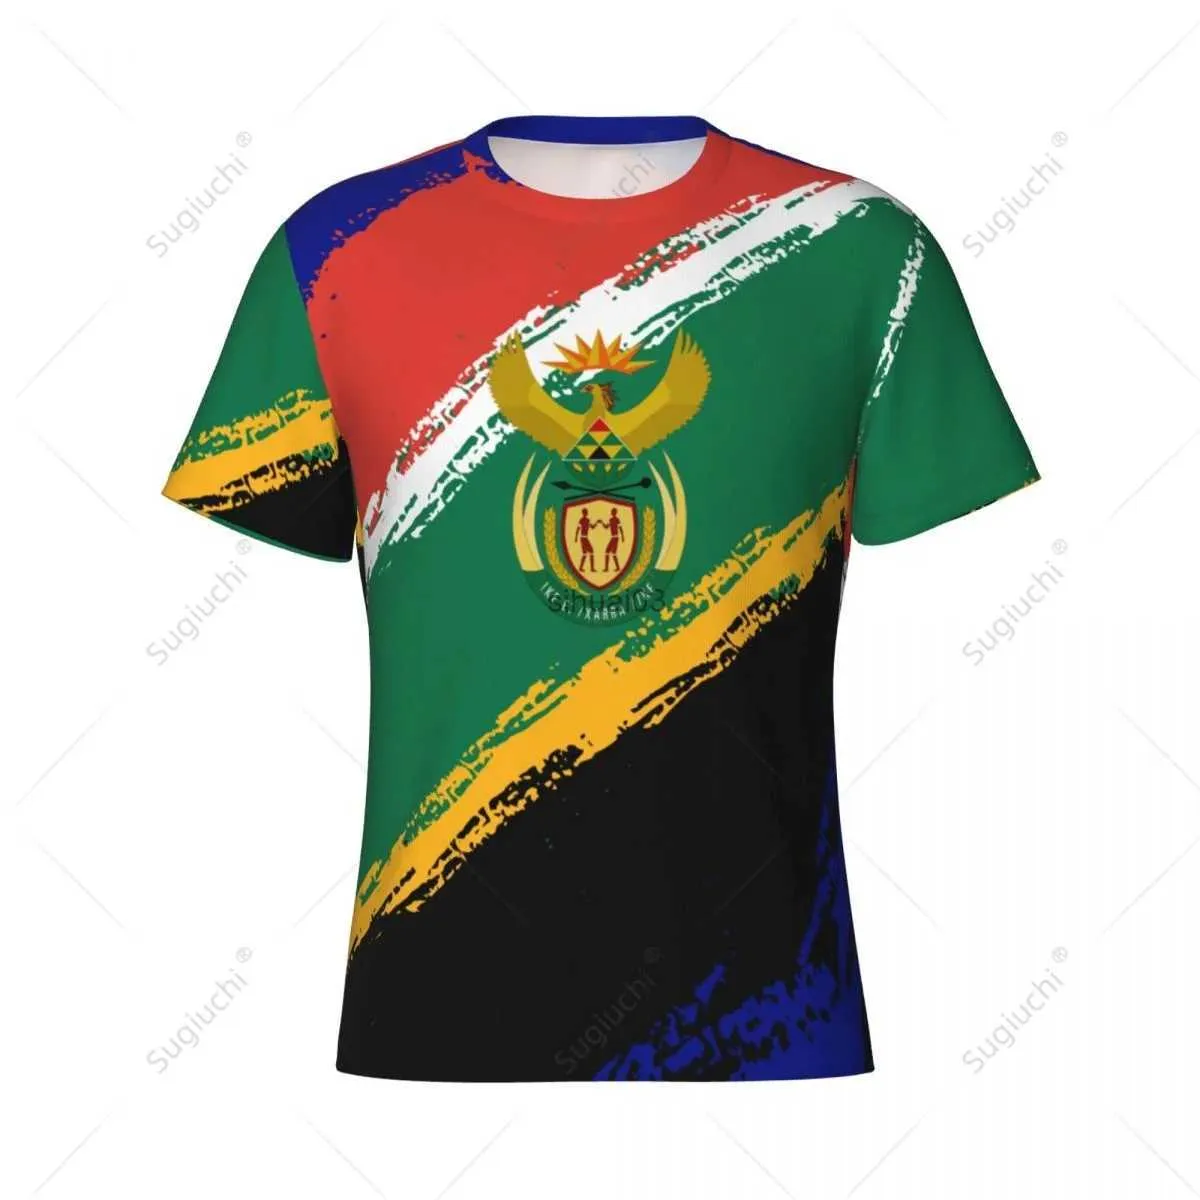 Männer T-Shirts Benutzerdefinierte Name Nunber Südafrika Flagge Farbe Männer Enge Sport T-shirt Frauen T-shirts trikot Für Fußball Fußball Fans